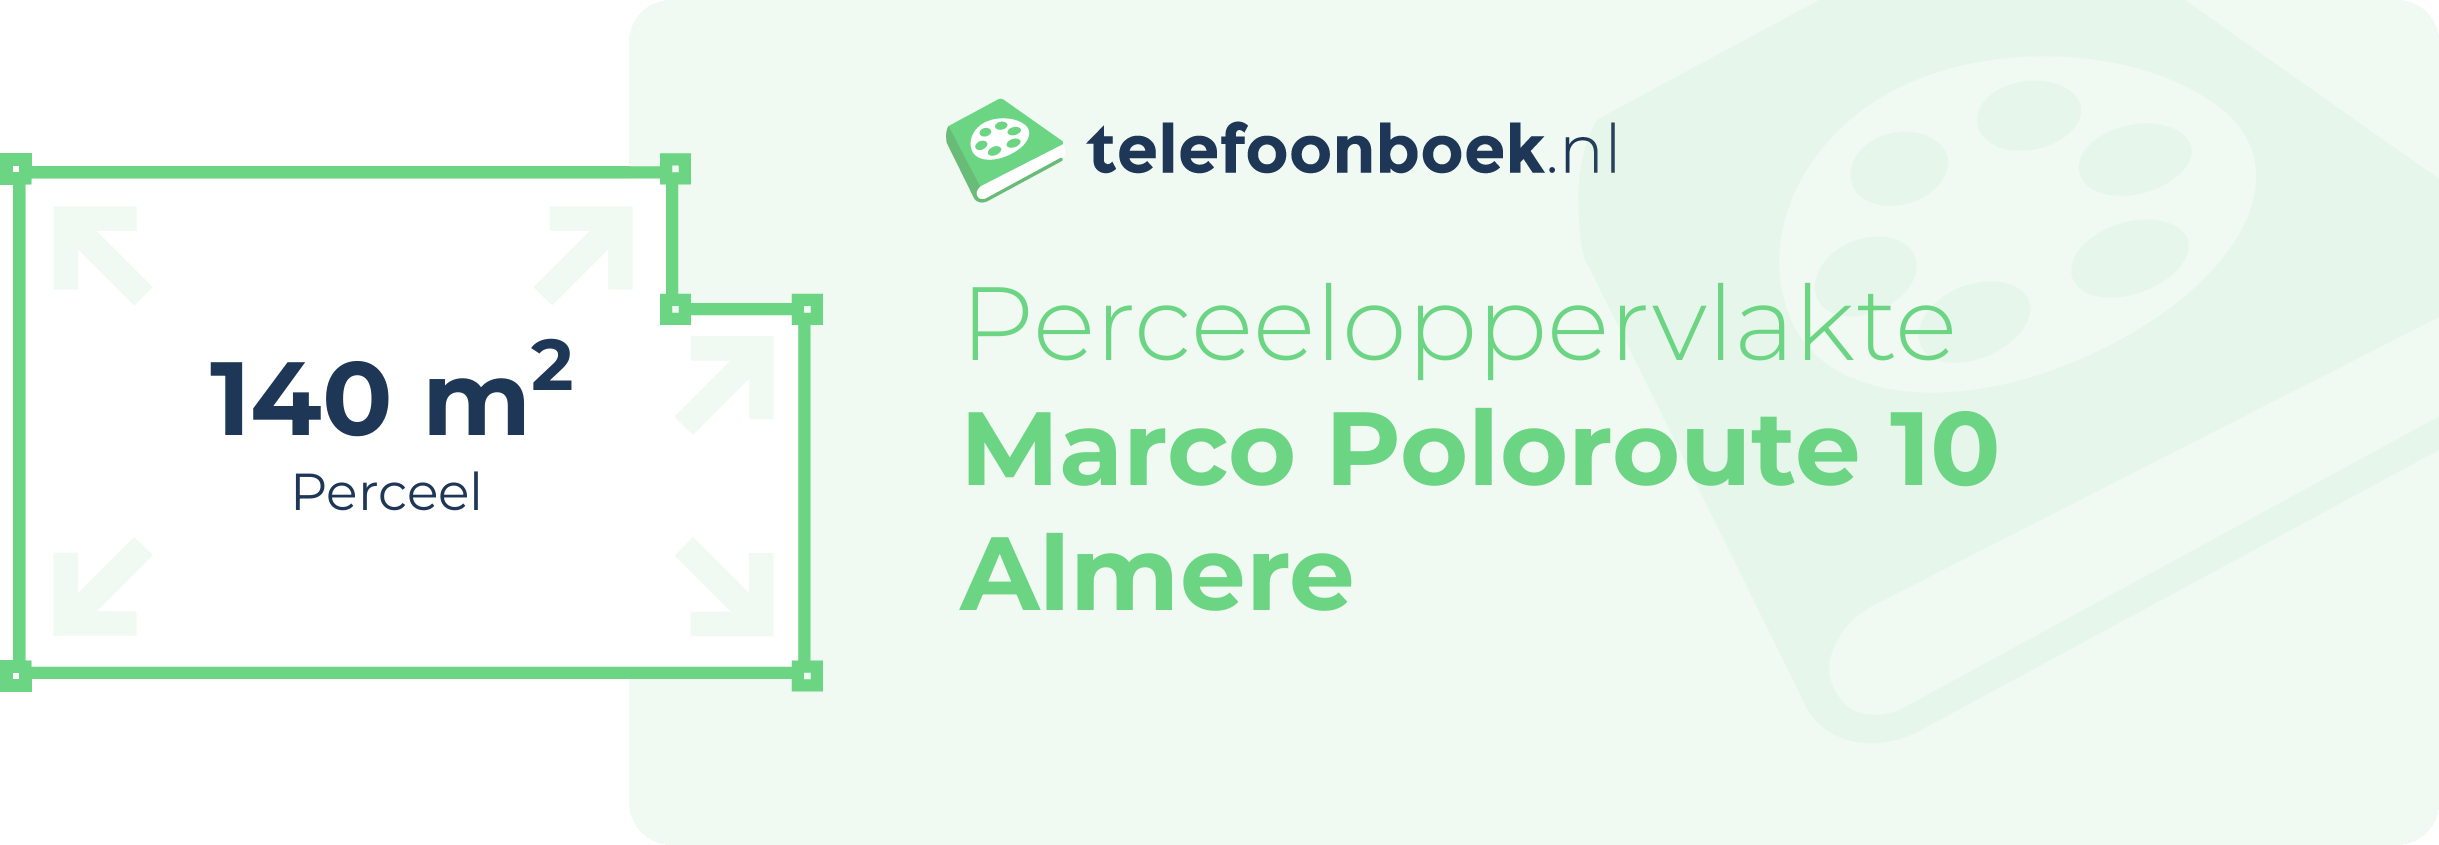 Perceeloppervlakte Marco Poloroute 10 Almere